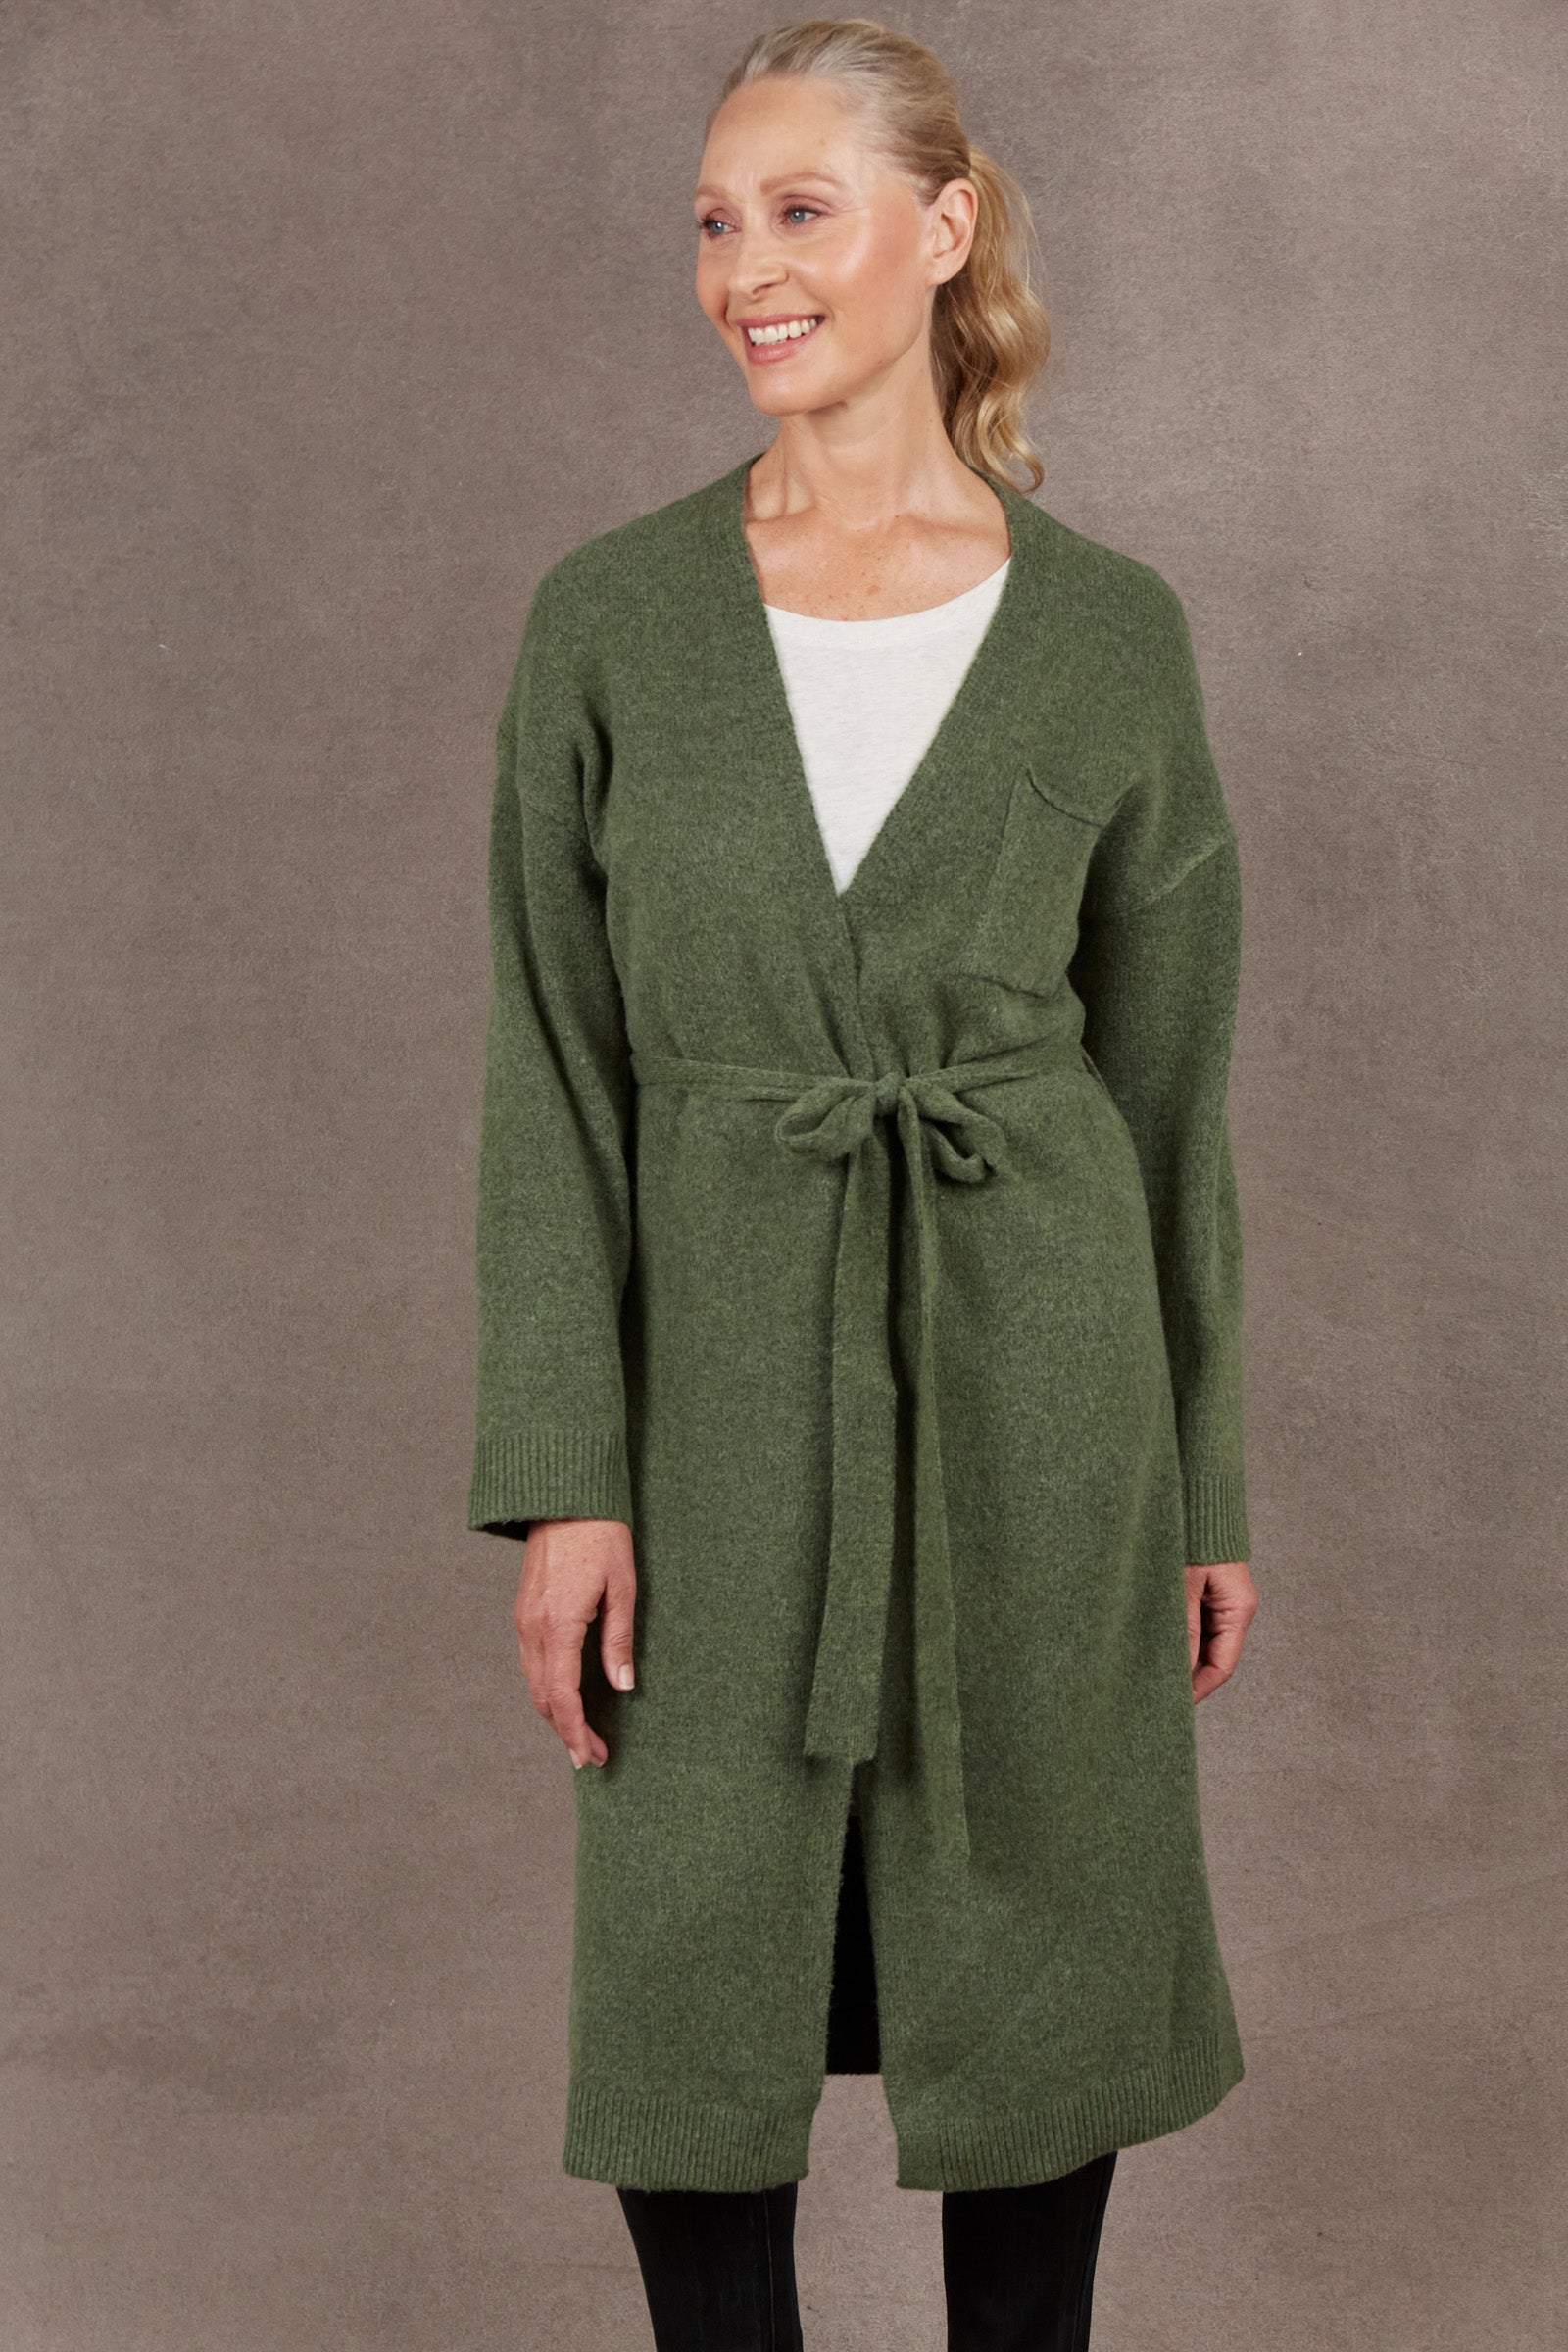 Paarl Longline Cardigan - Moss - eb&ive Clothing - Knit Cardigan Long One Size